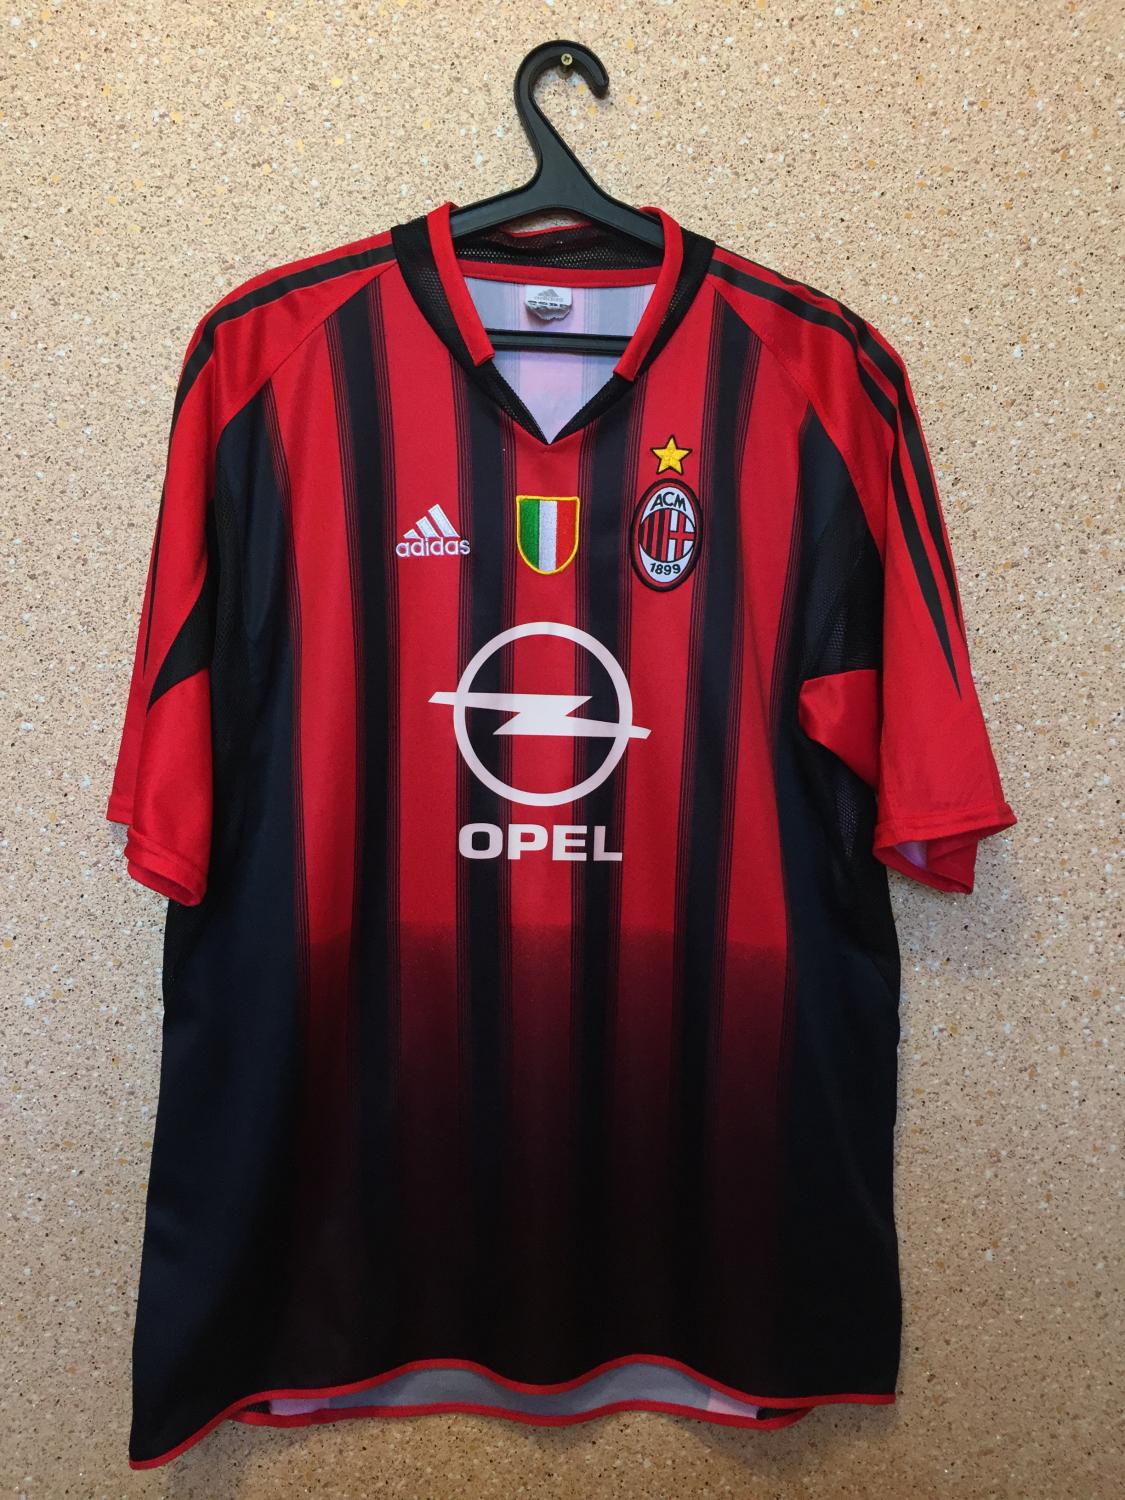 AC Milan Home football shirt 2004 - 2005. Sponsored by Opel